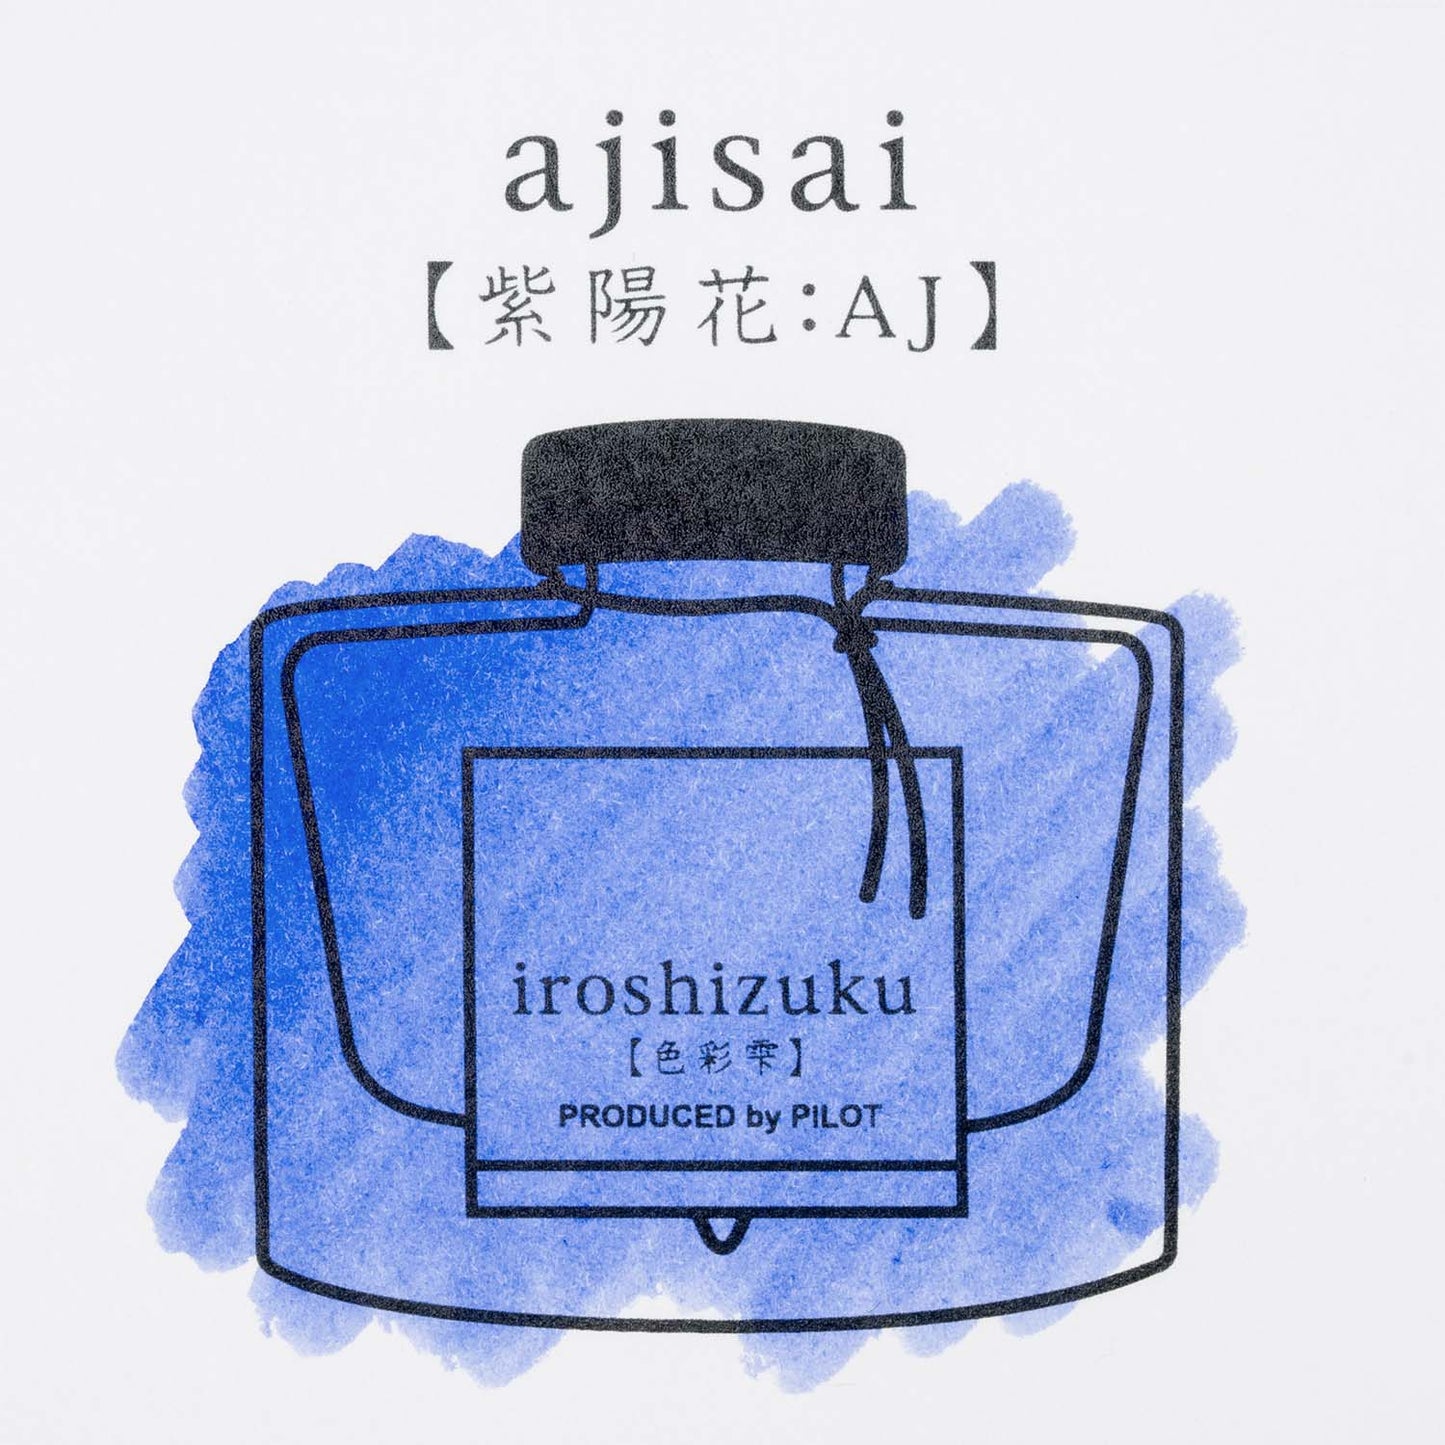 Pilot Iroshizuku Fountain Pen Ink - Ajisai (Hydrangea) - sample